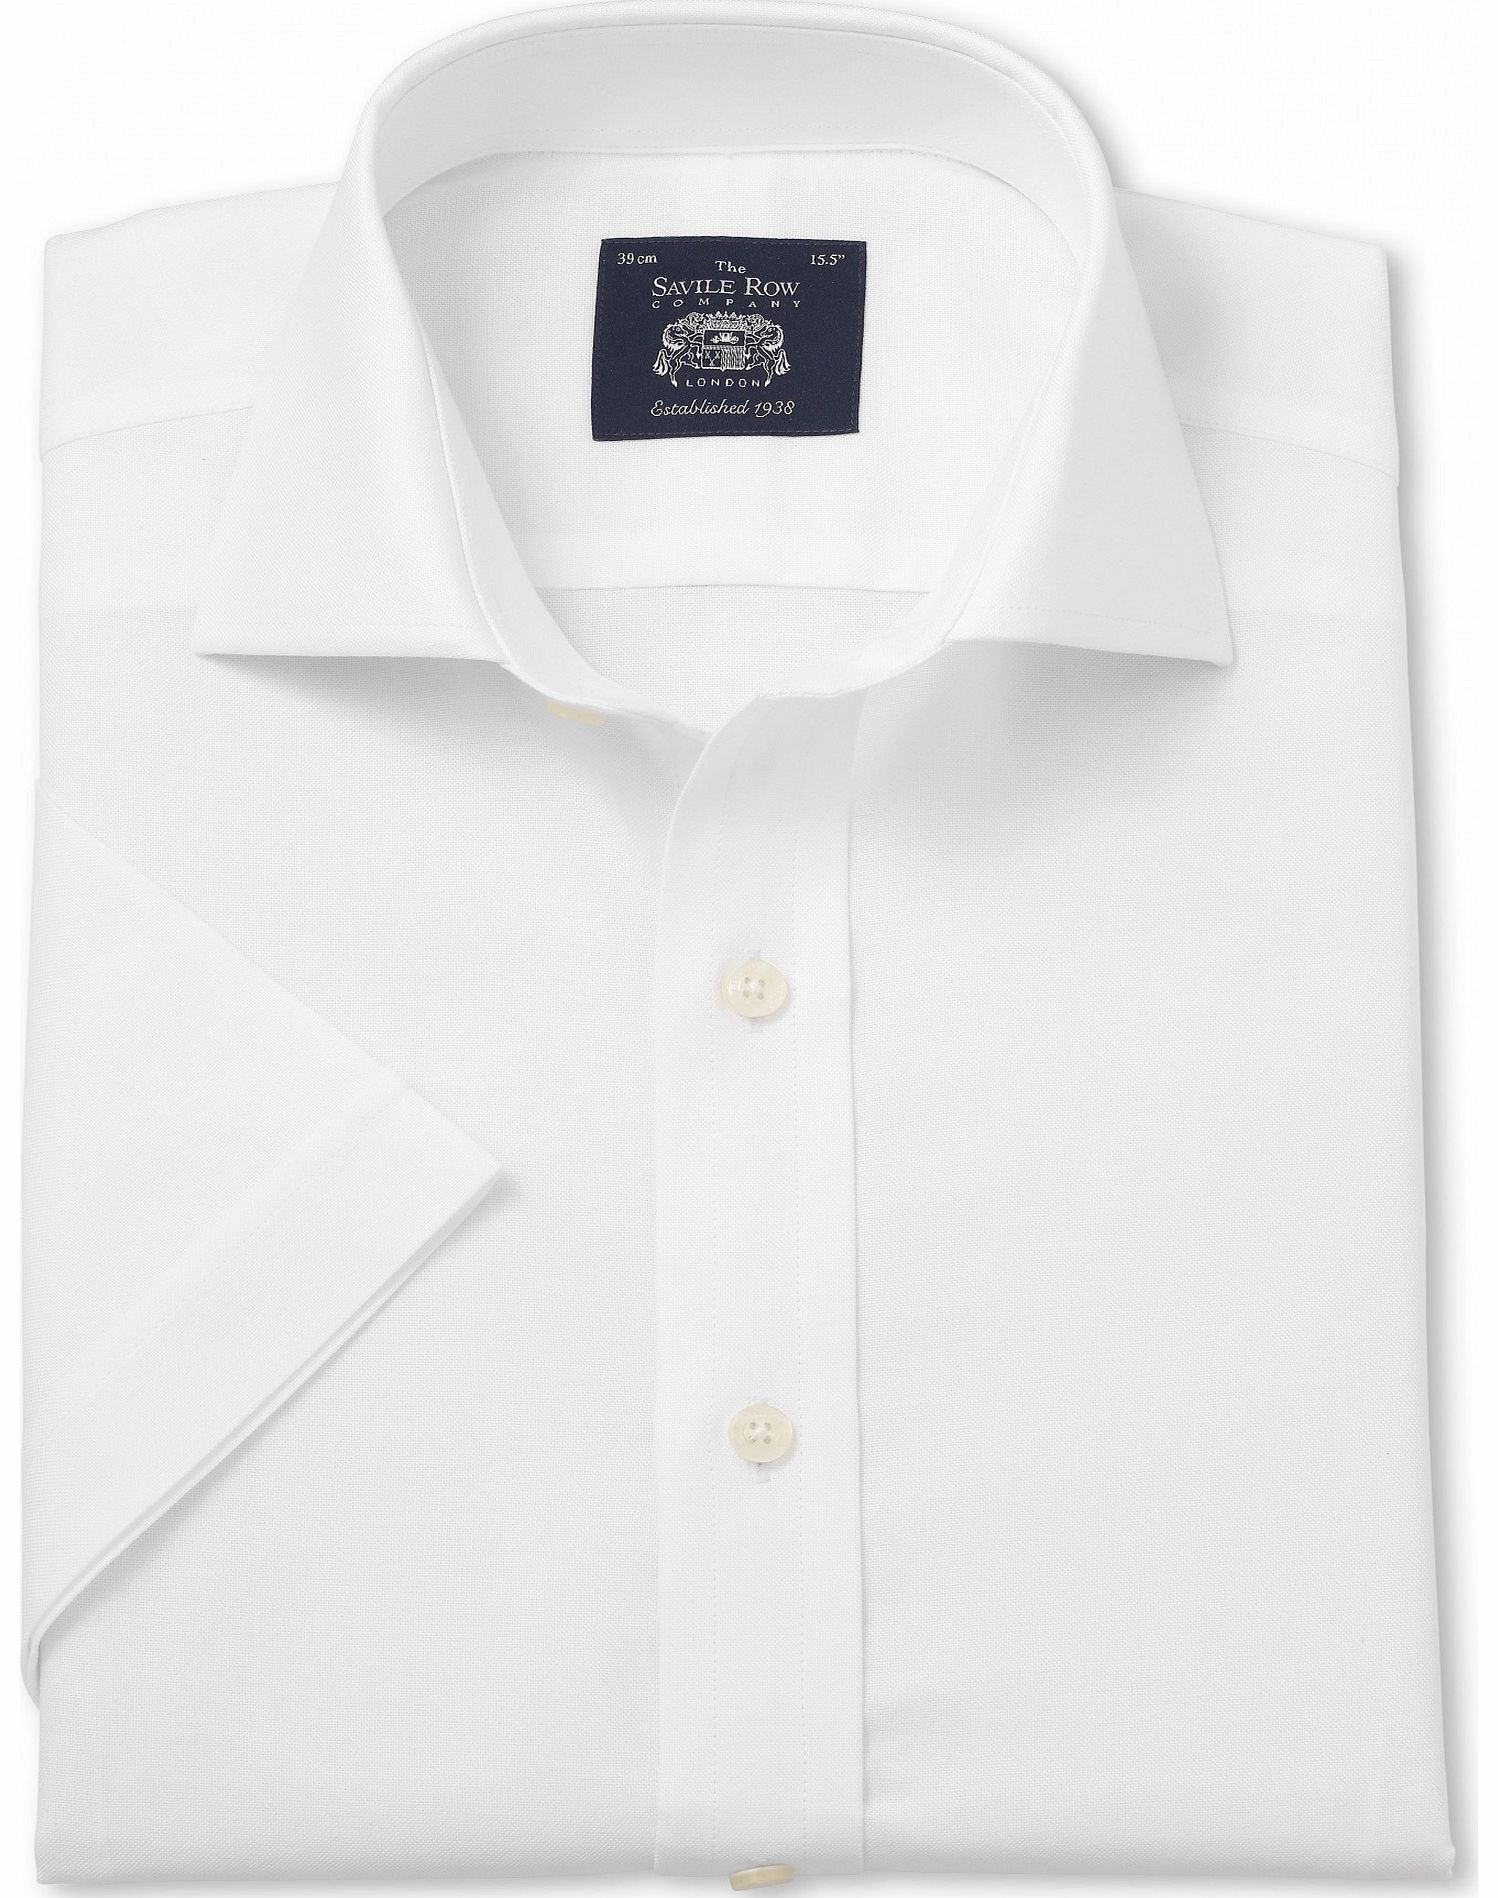 Savile Row Company White Pinpoint Short Sleeve Slim Fit Shirt 17